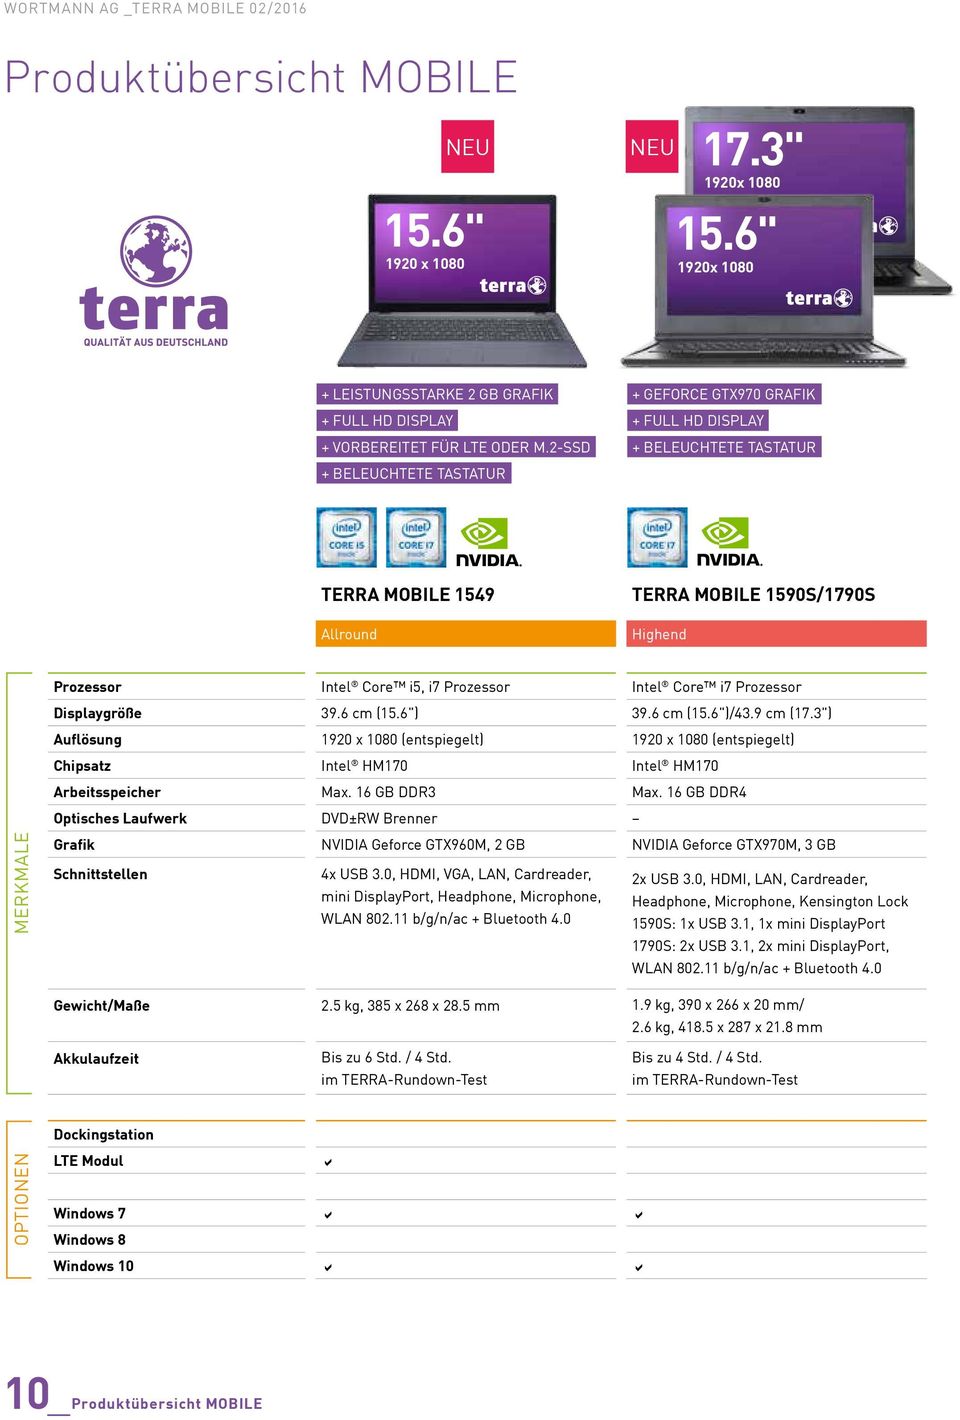 2-SSD + BELEUCHTETE TASTATUR + BELEUCHTETE TASTATUR TERRA MOBILE 1549 Allround TERRA MOBILE 1590S/1790S Highend Prozessor Intel Core i5, i7 Prozessor Intel Core i7 Prozessor Displaygröße 39.6 cm (15.